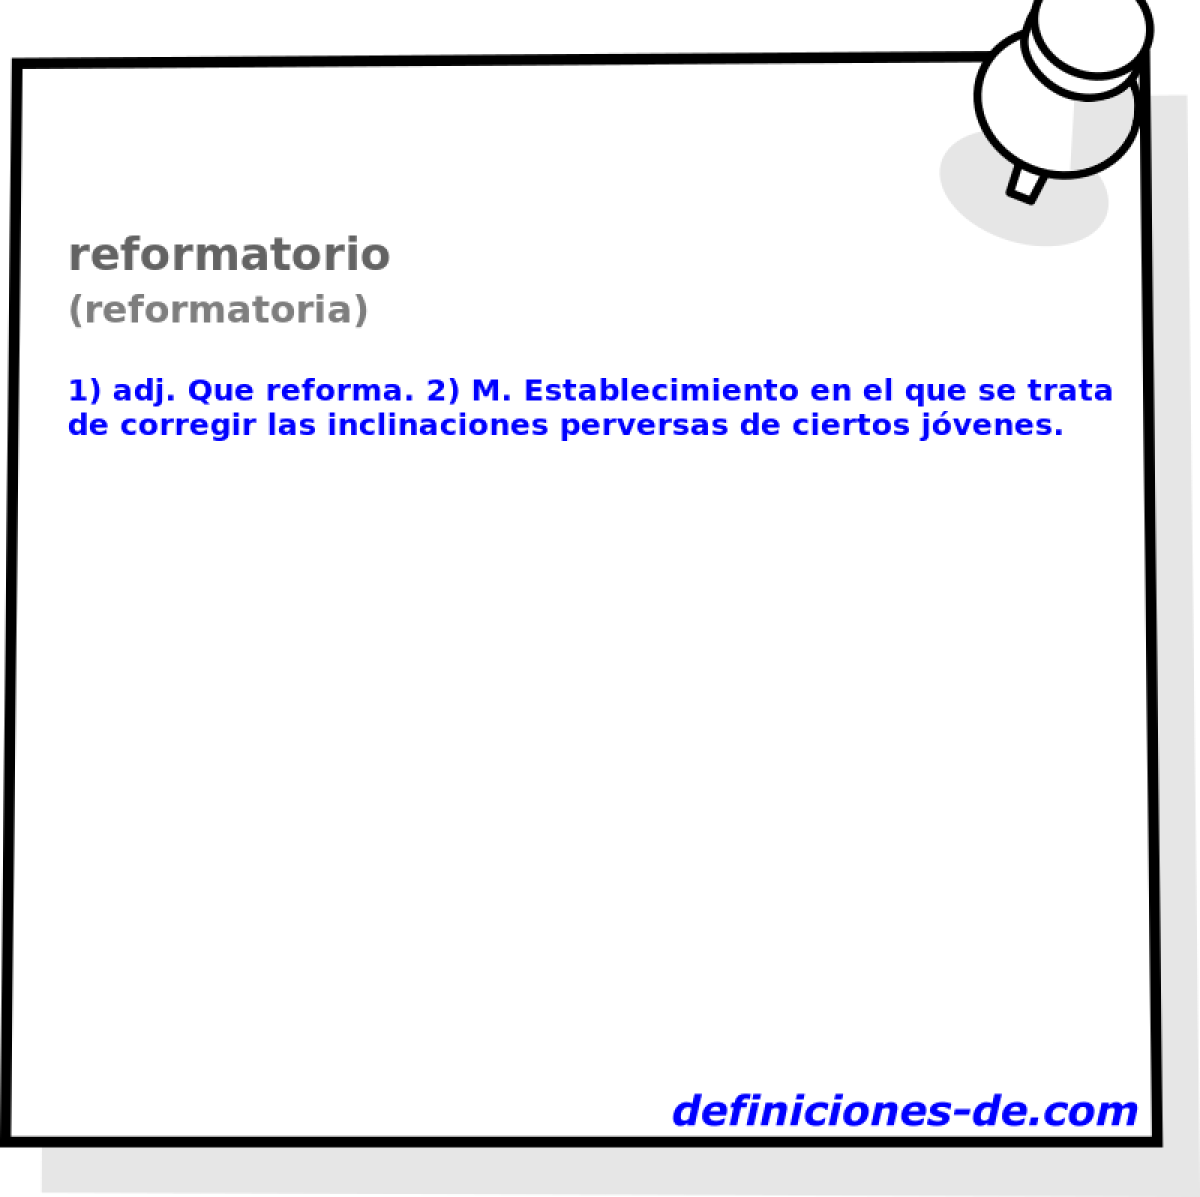 reformatorio (reformatoria)